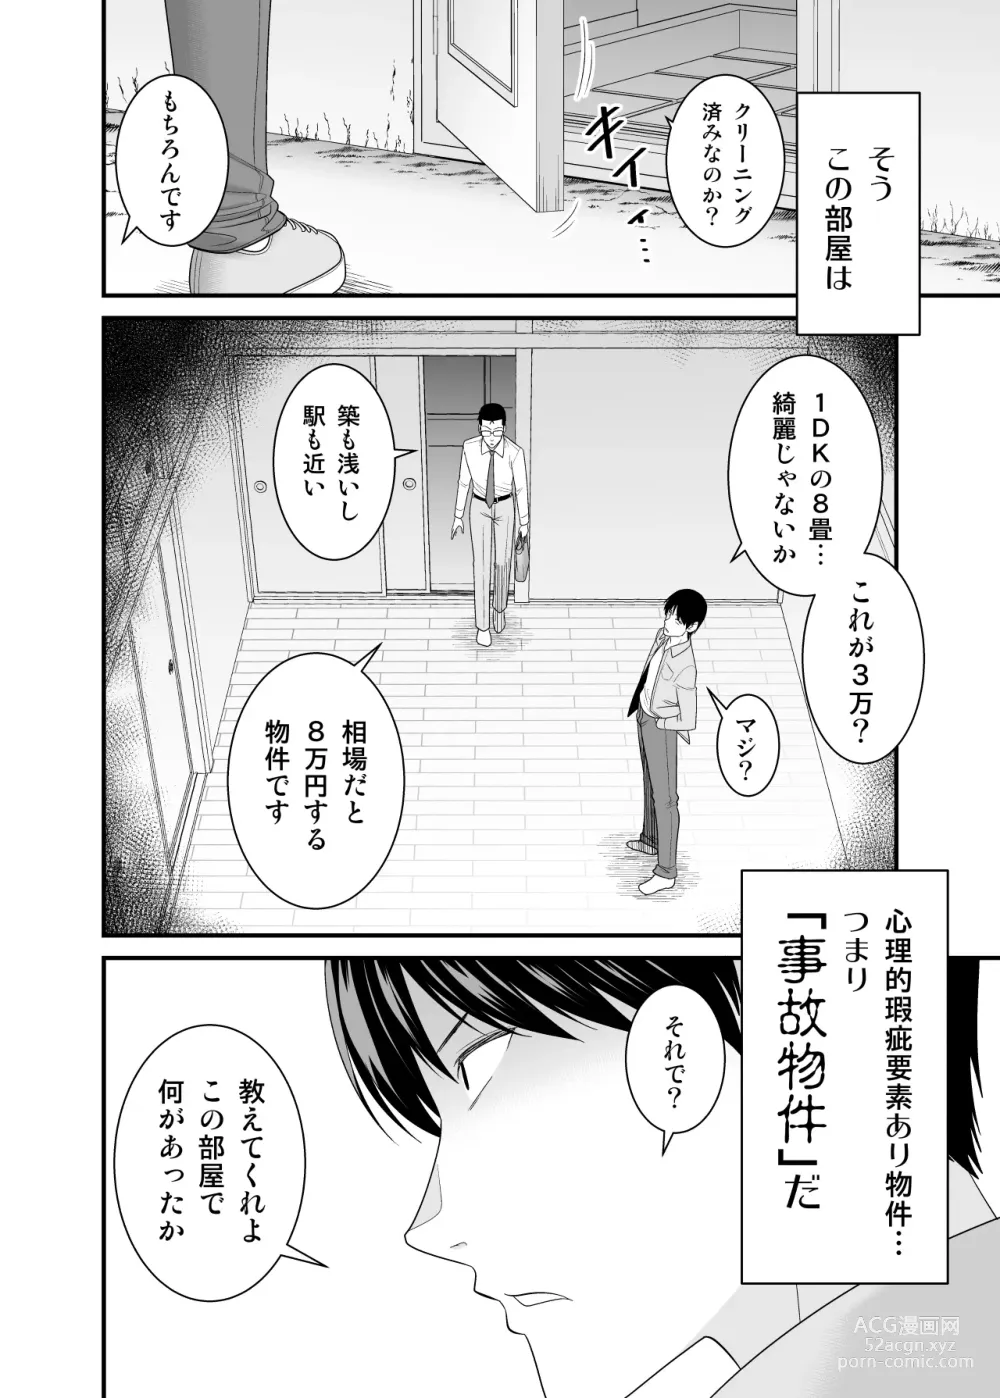 Page 3 of doujinshi ヤバい事故物件に女幽霊が出たけど無職底辺の俺はセックスしまくる